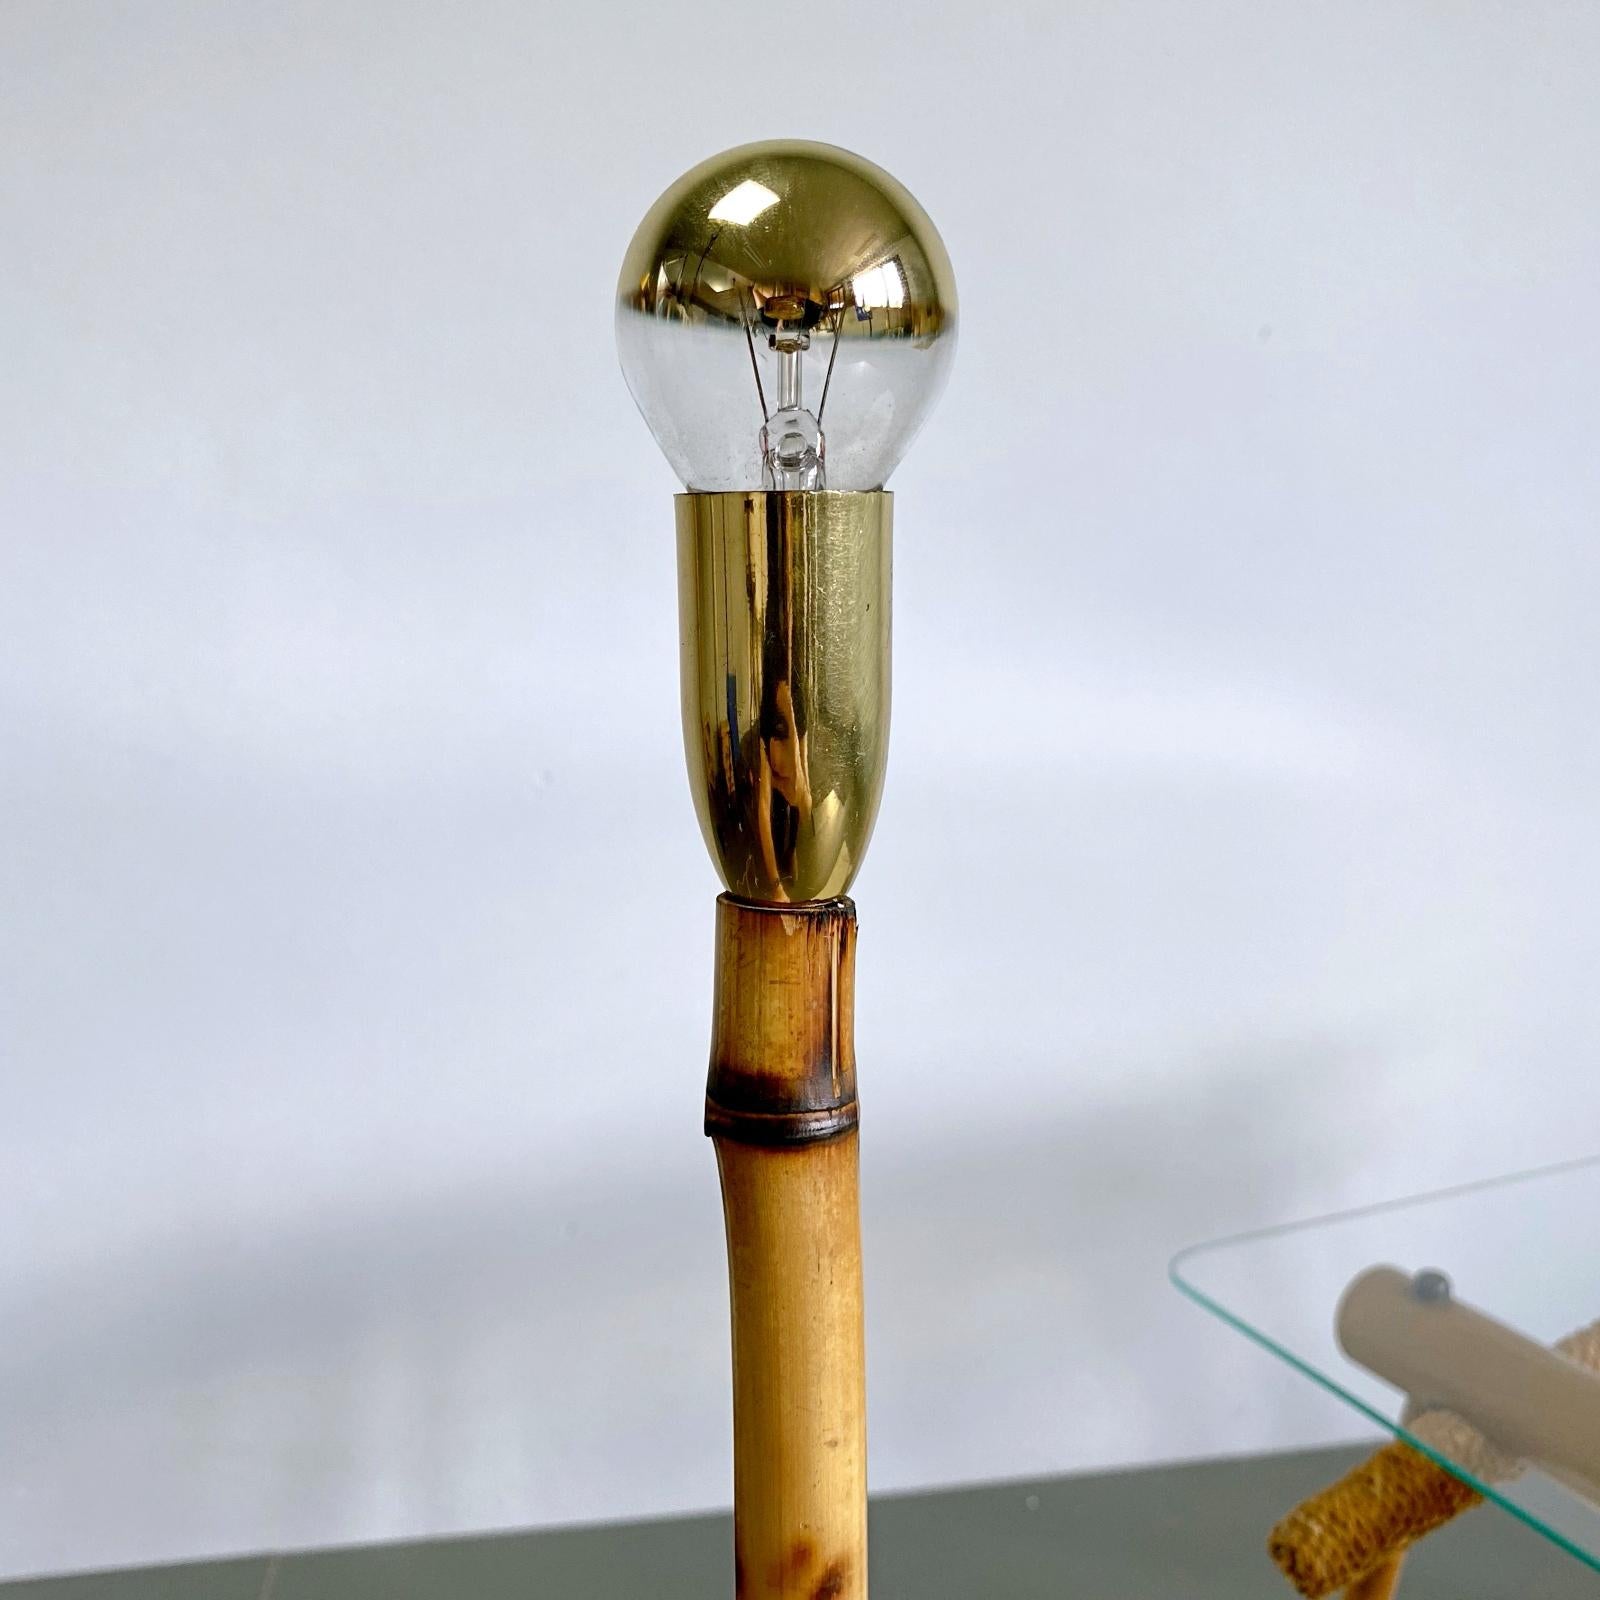 Metalwork Two Midcentury Rupert Nikoll Brass & Bamboo Nightstand Table Lamp, 1955, Austria